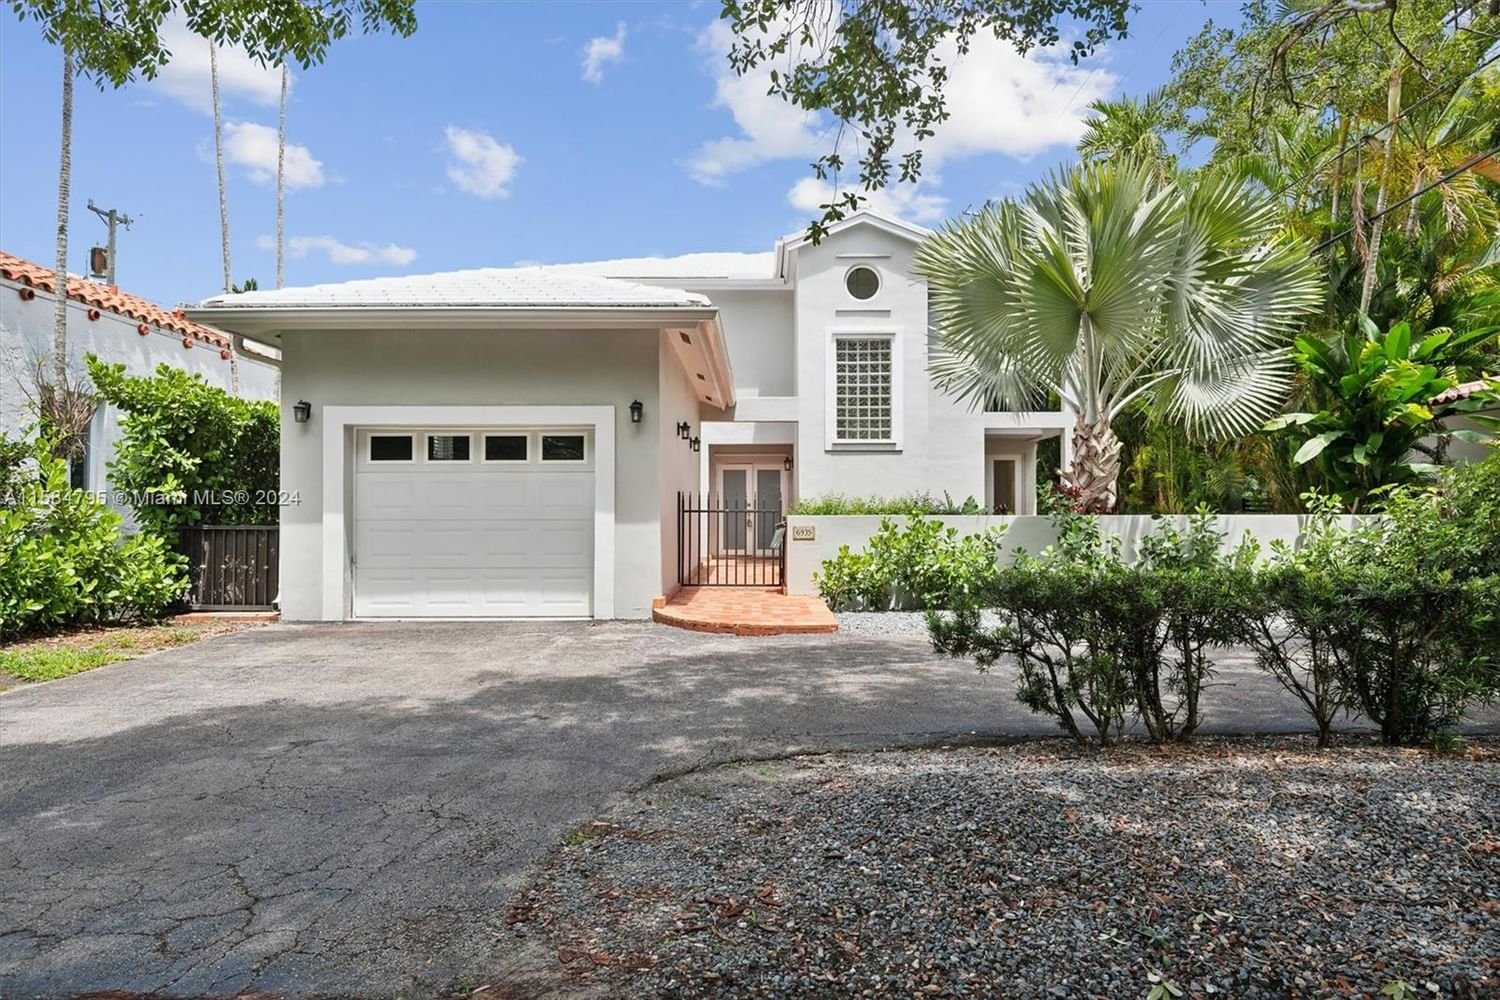 Real estate property located at 6935 Mindello St, Miami-Dade County, CORAL GABLES RIVIERA SEC, Coral Gables, FL